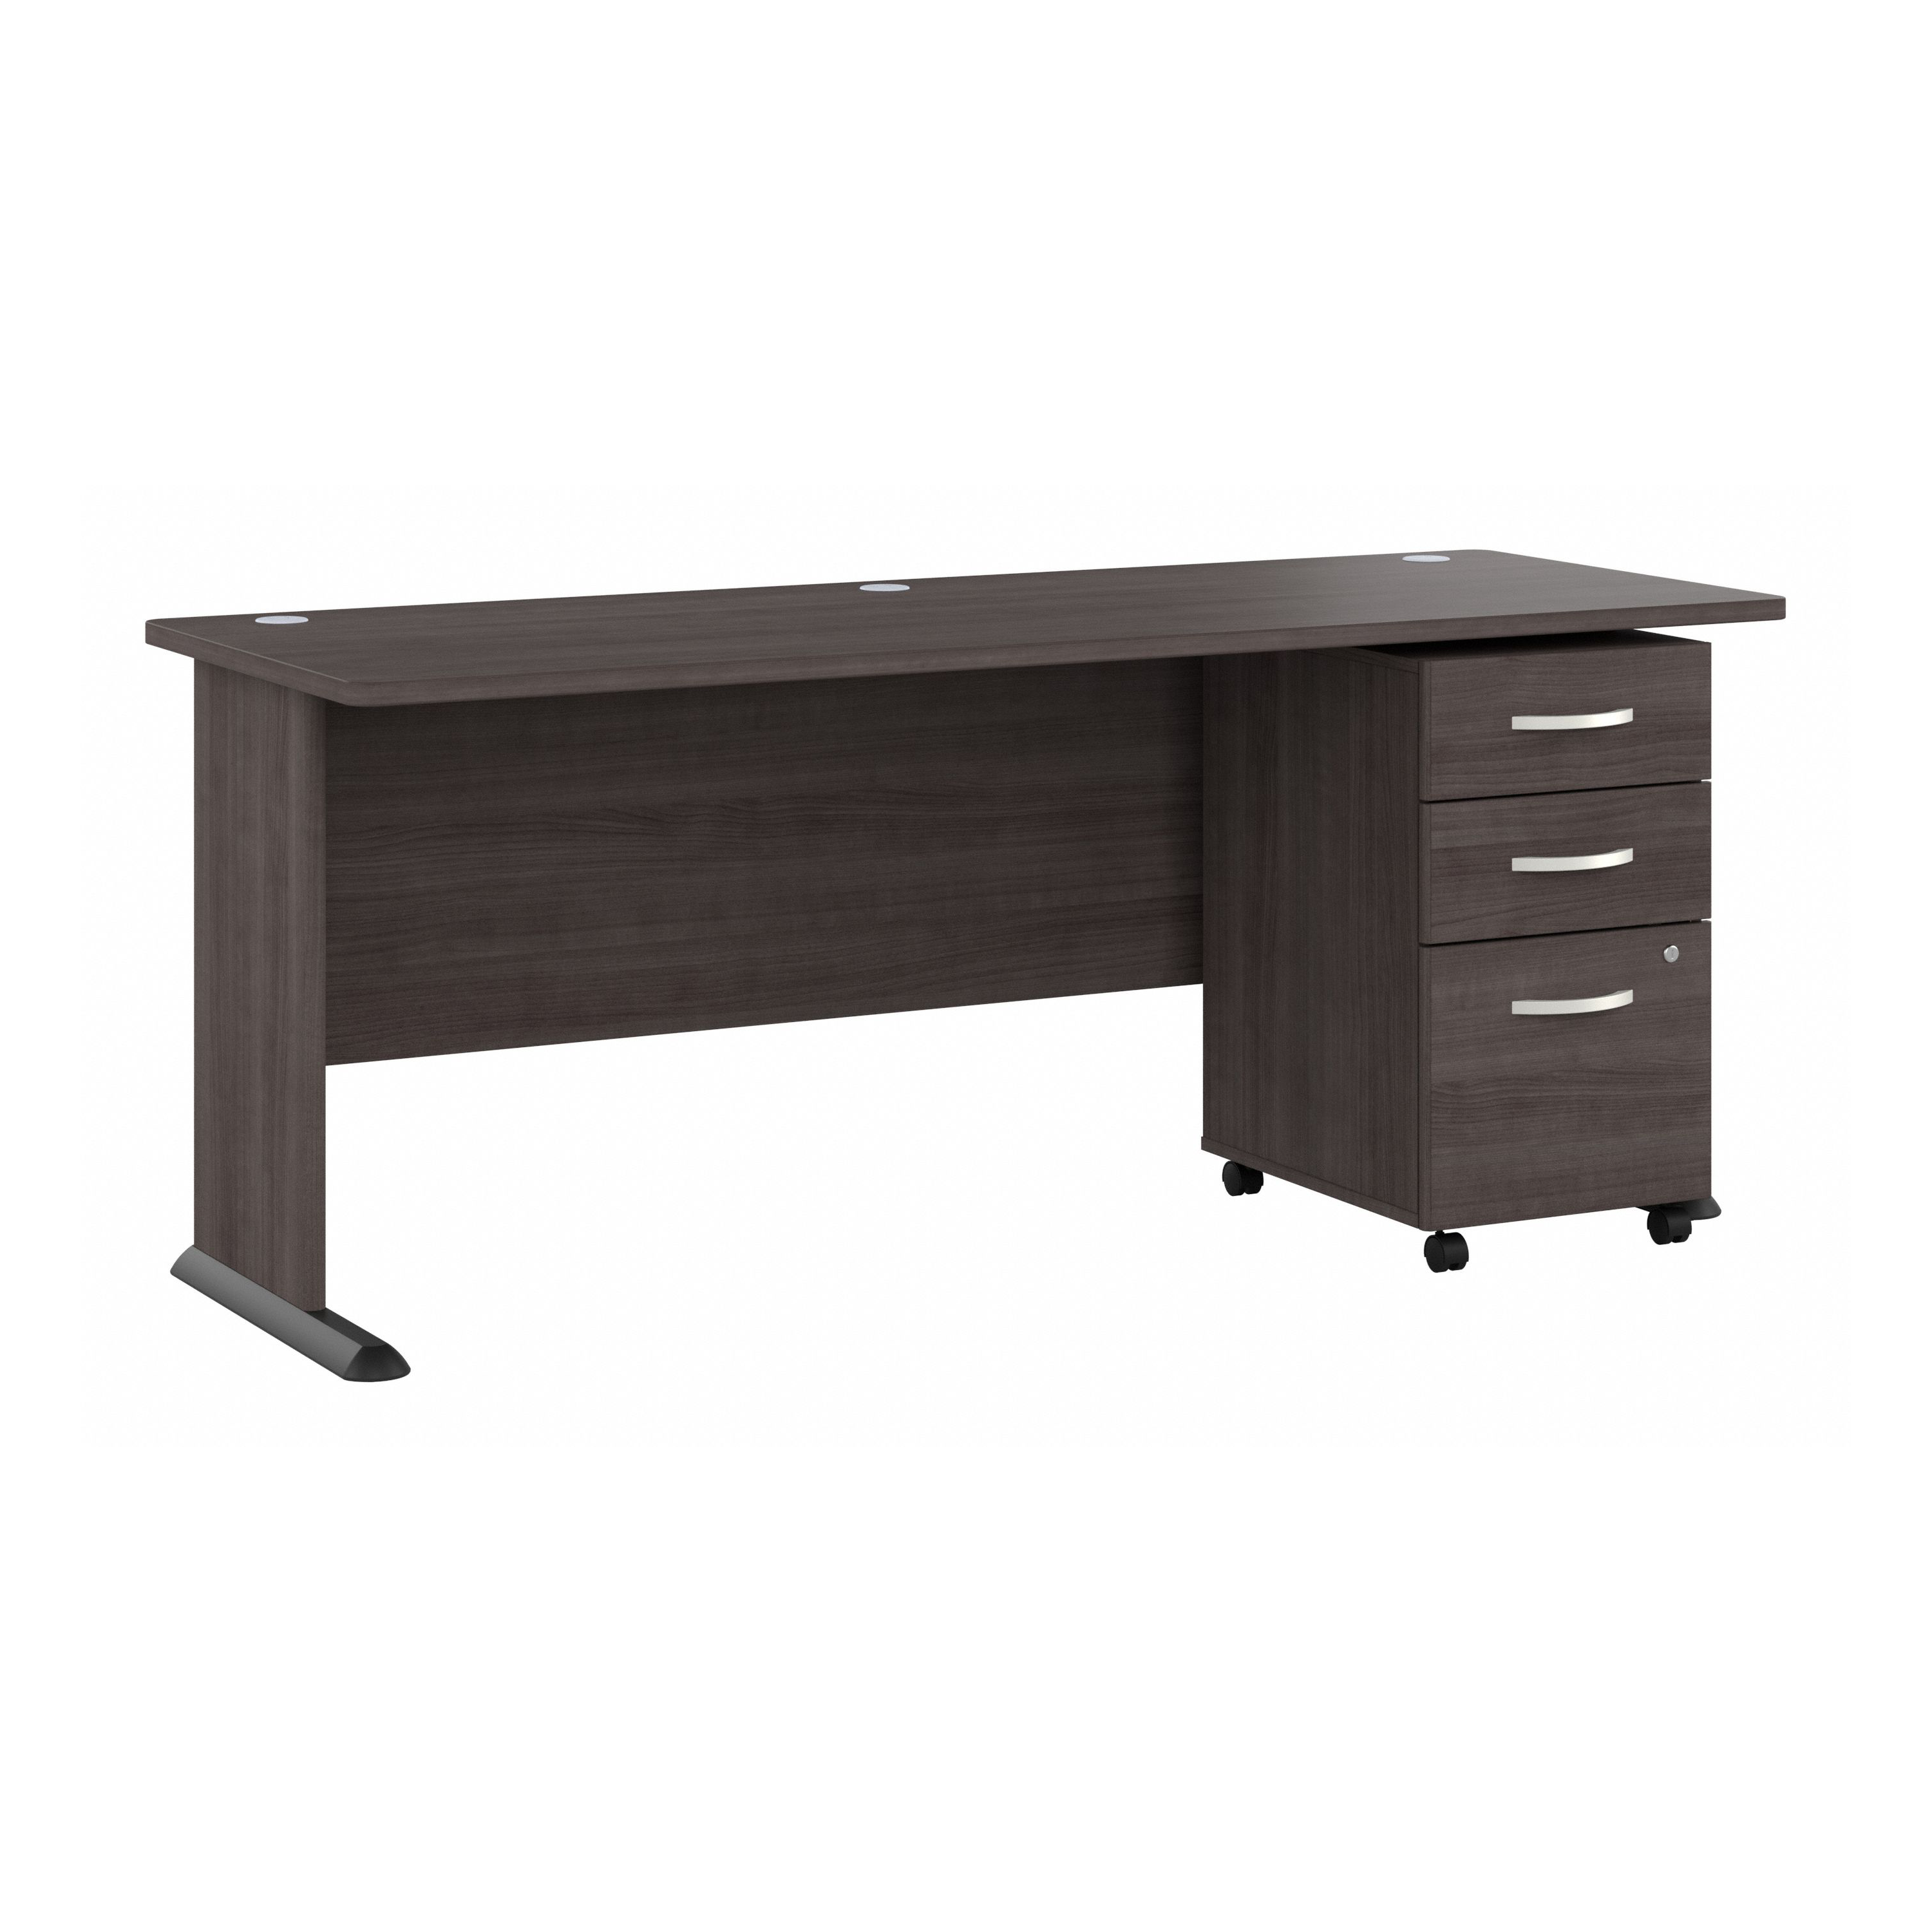 Shop Bush Business Furniture Studio A 72W Computer Desk with 3 Drawer Mobile File Cabinet 02 STA004SGSU #color_storm gray